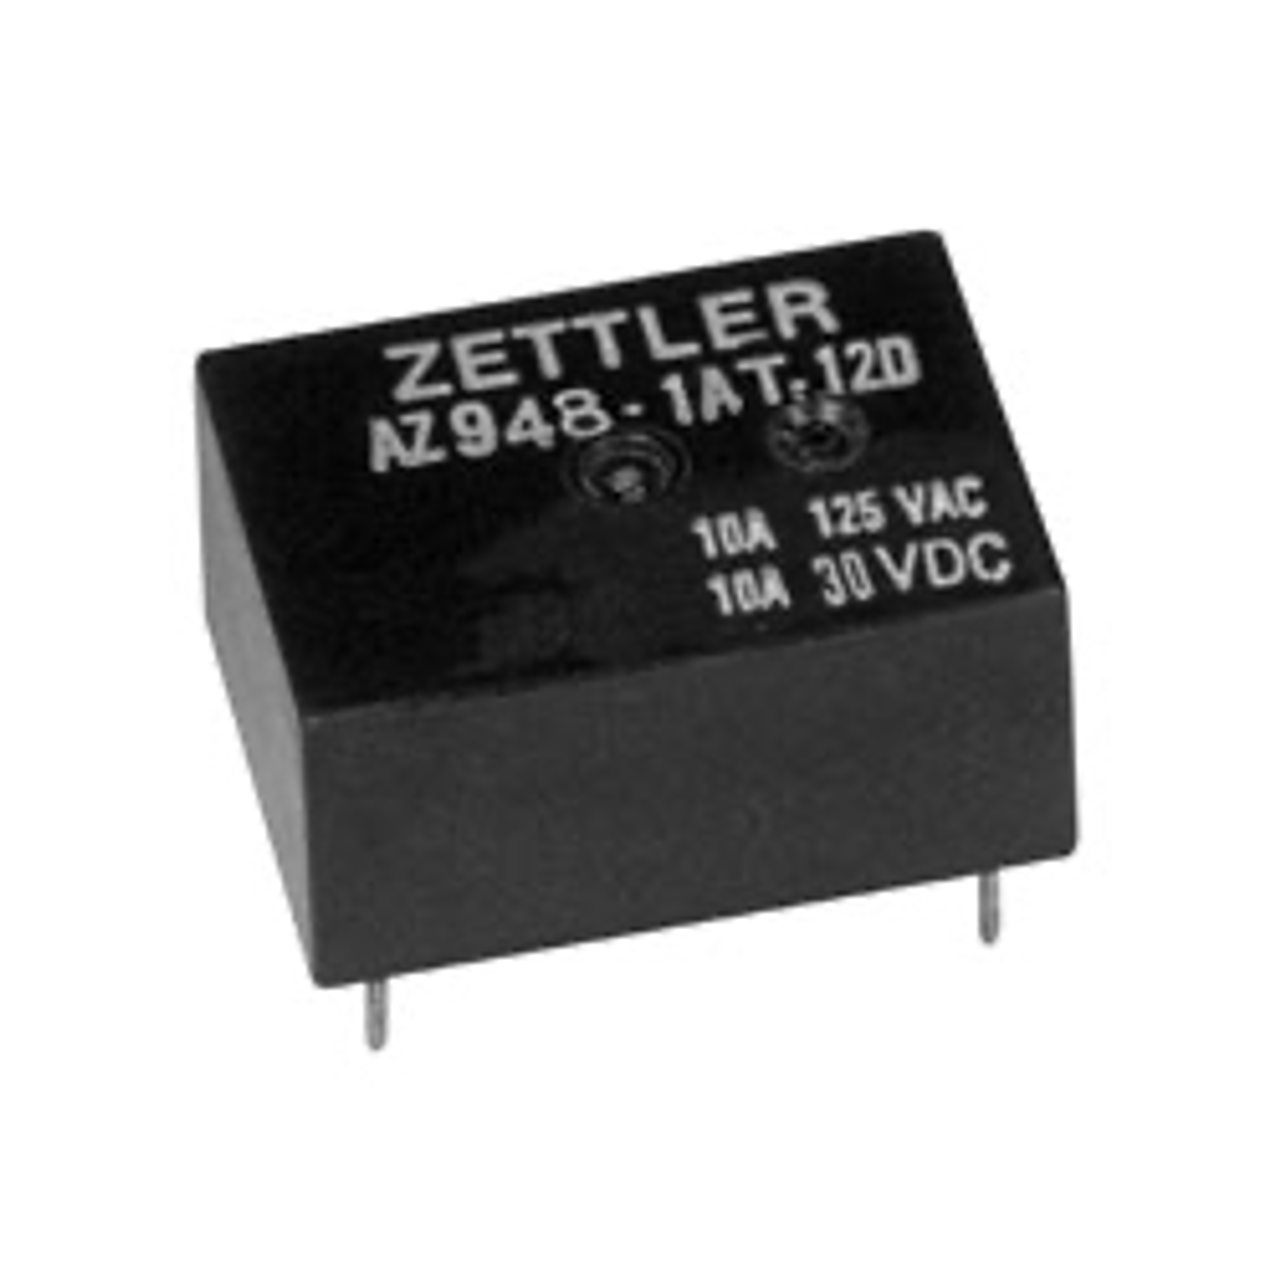 American Zettler AZ948-1AET-12D Power Relay